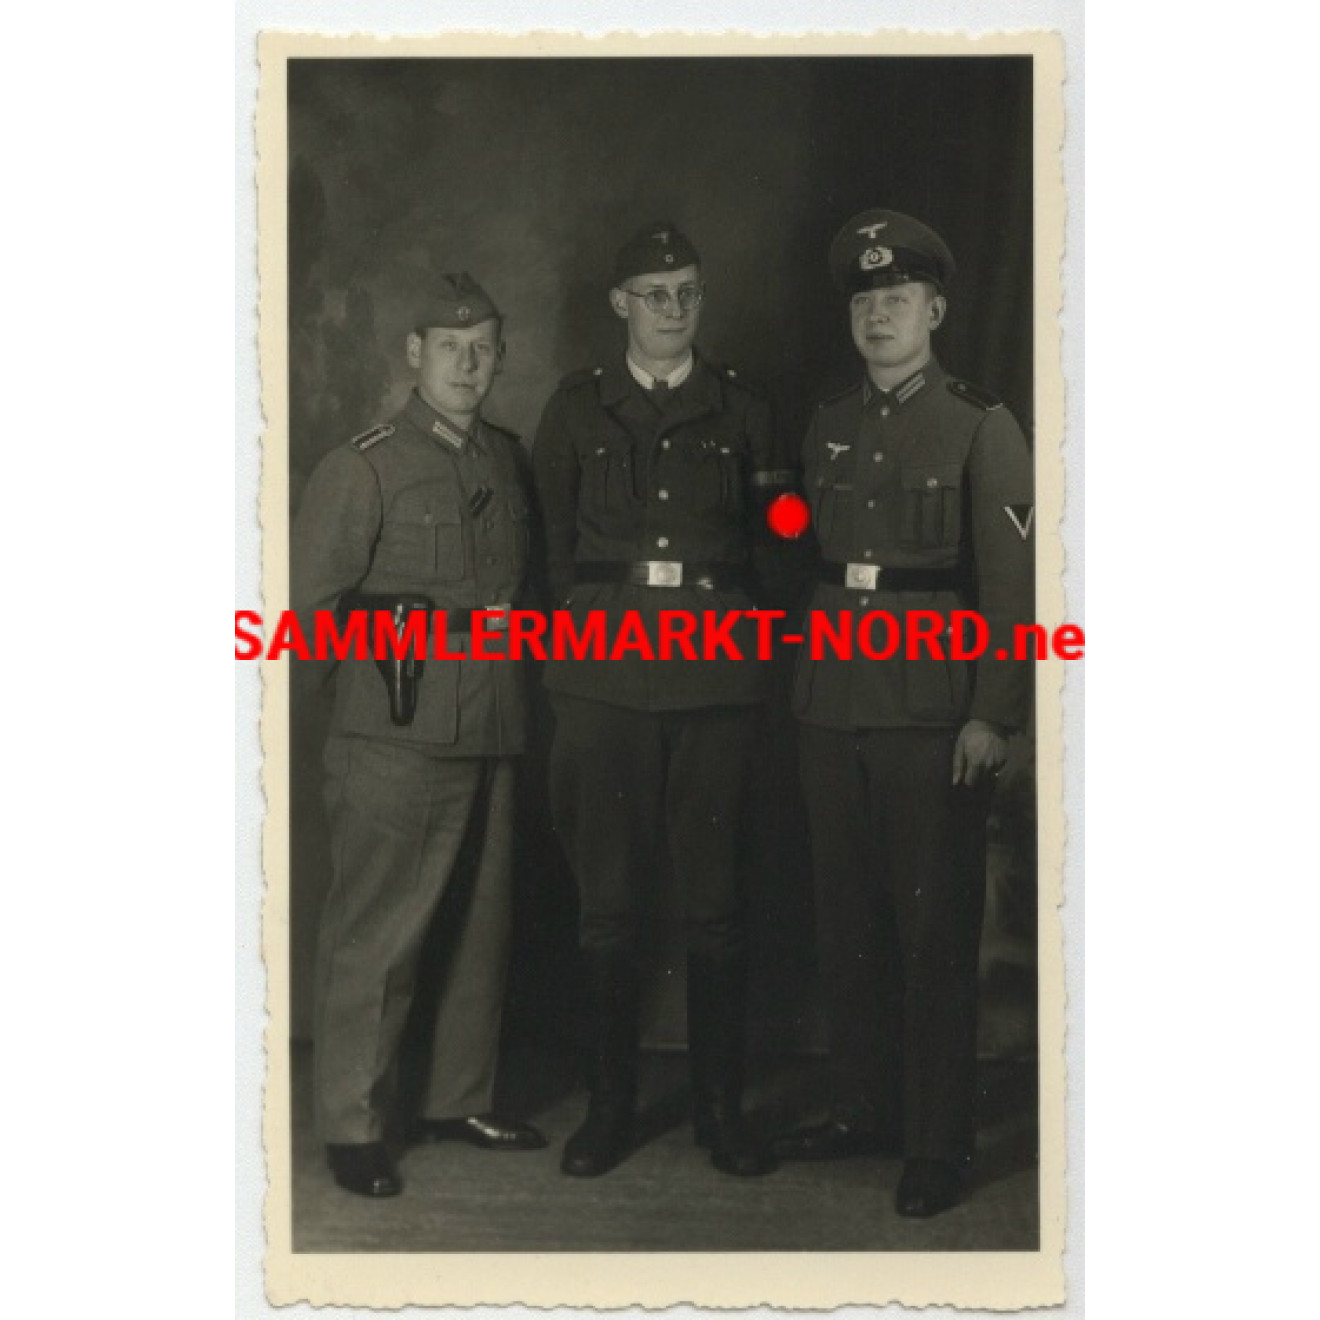 German police, Organisation Todt and Wehrmacht